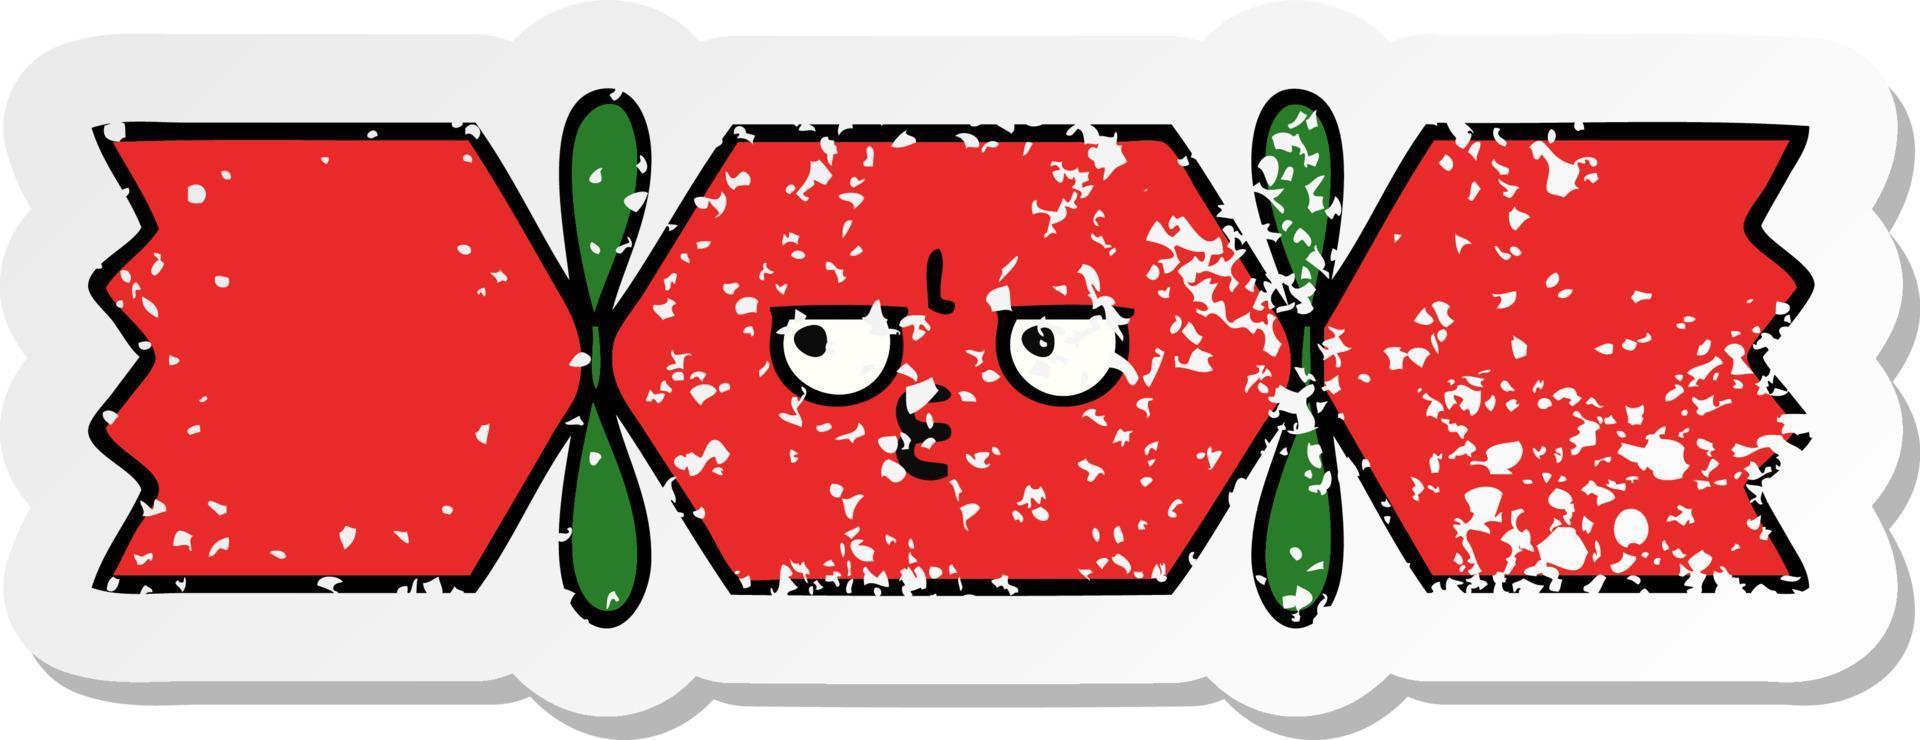 distressed sticker of a cute cartoon christmas cracker vector